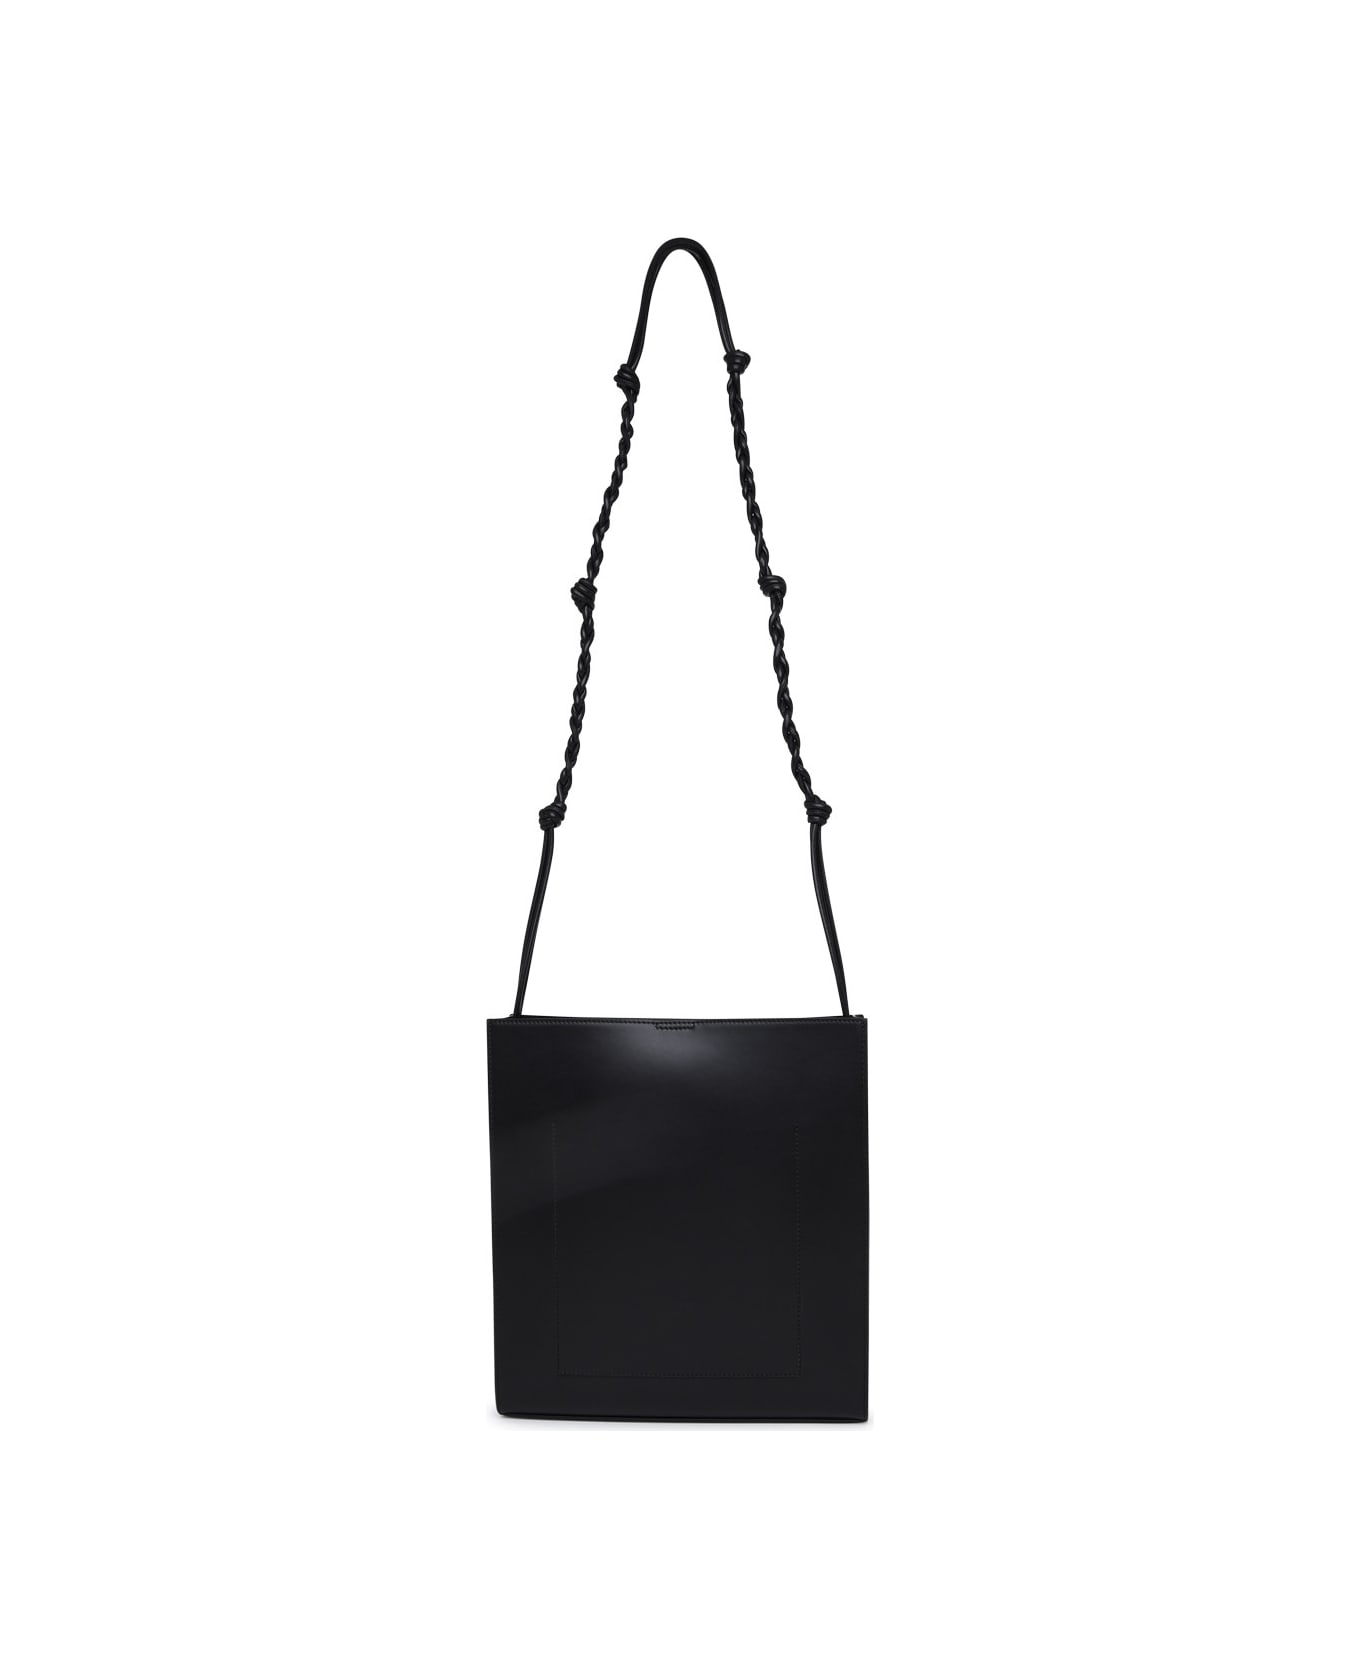 Jil Sander Medium Tangle Bag In Black Leather - Black ショルダーバッグ